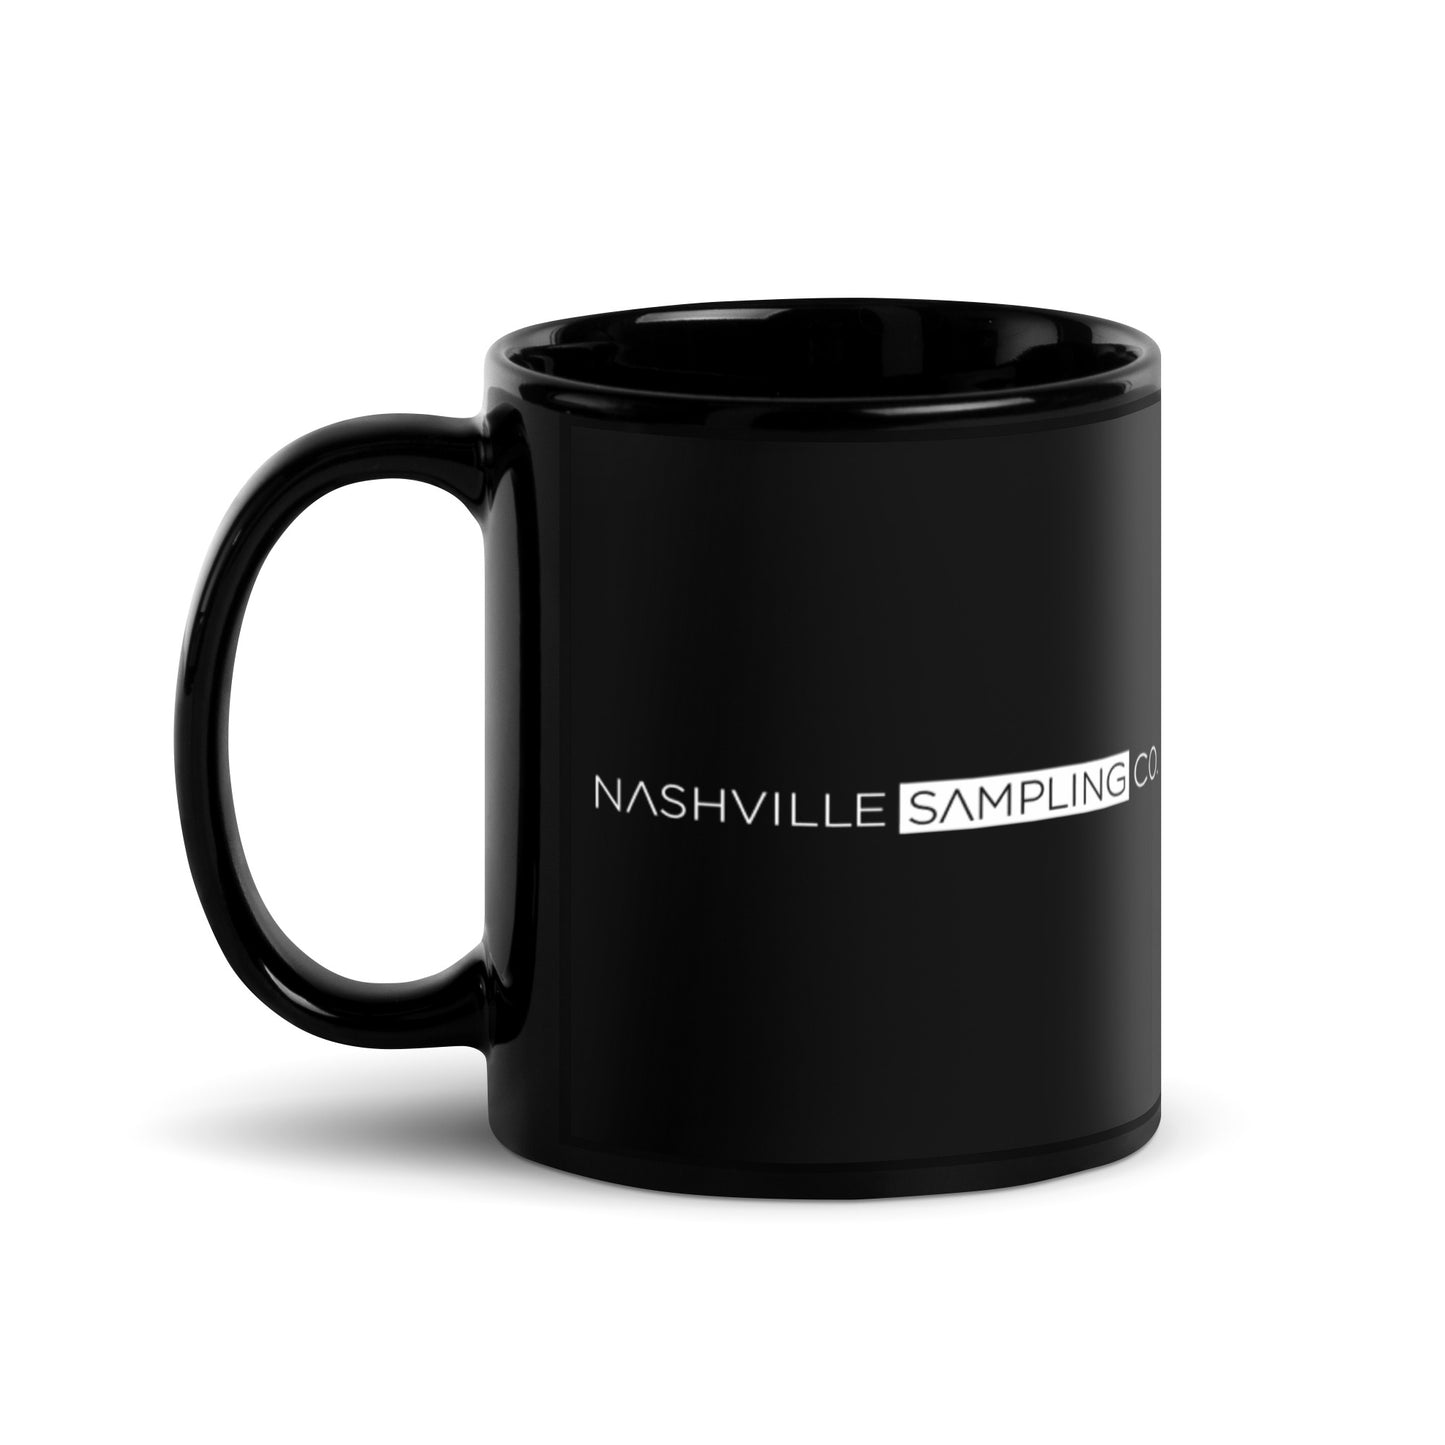 Nashville Sampling Co Black Glossy Mug